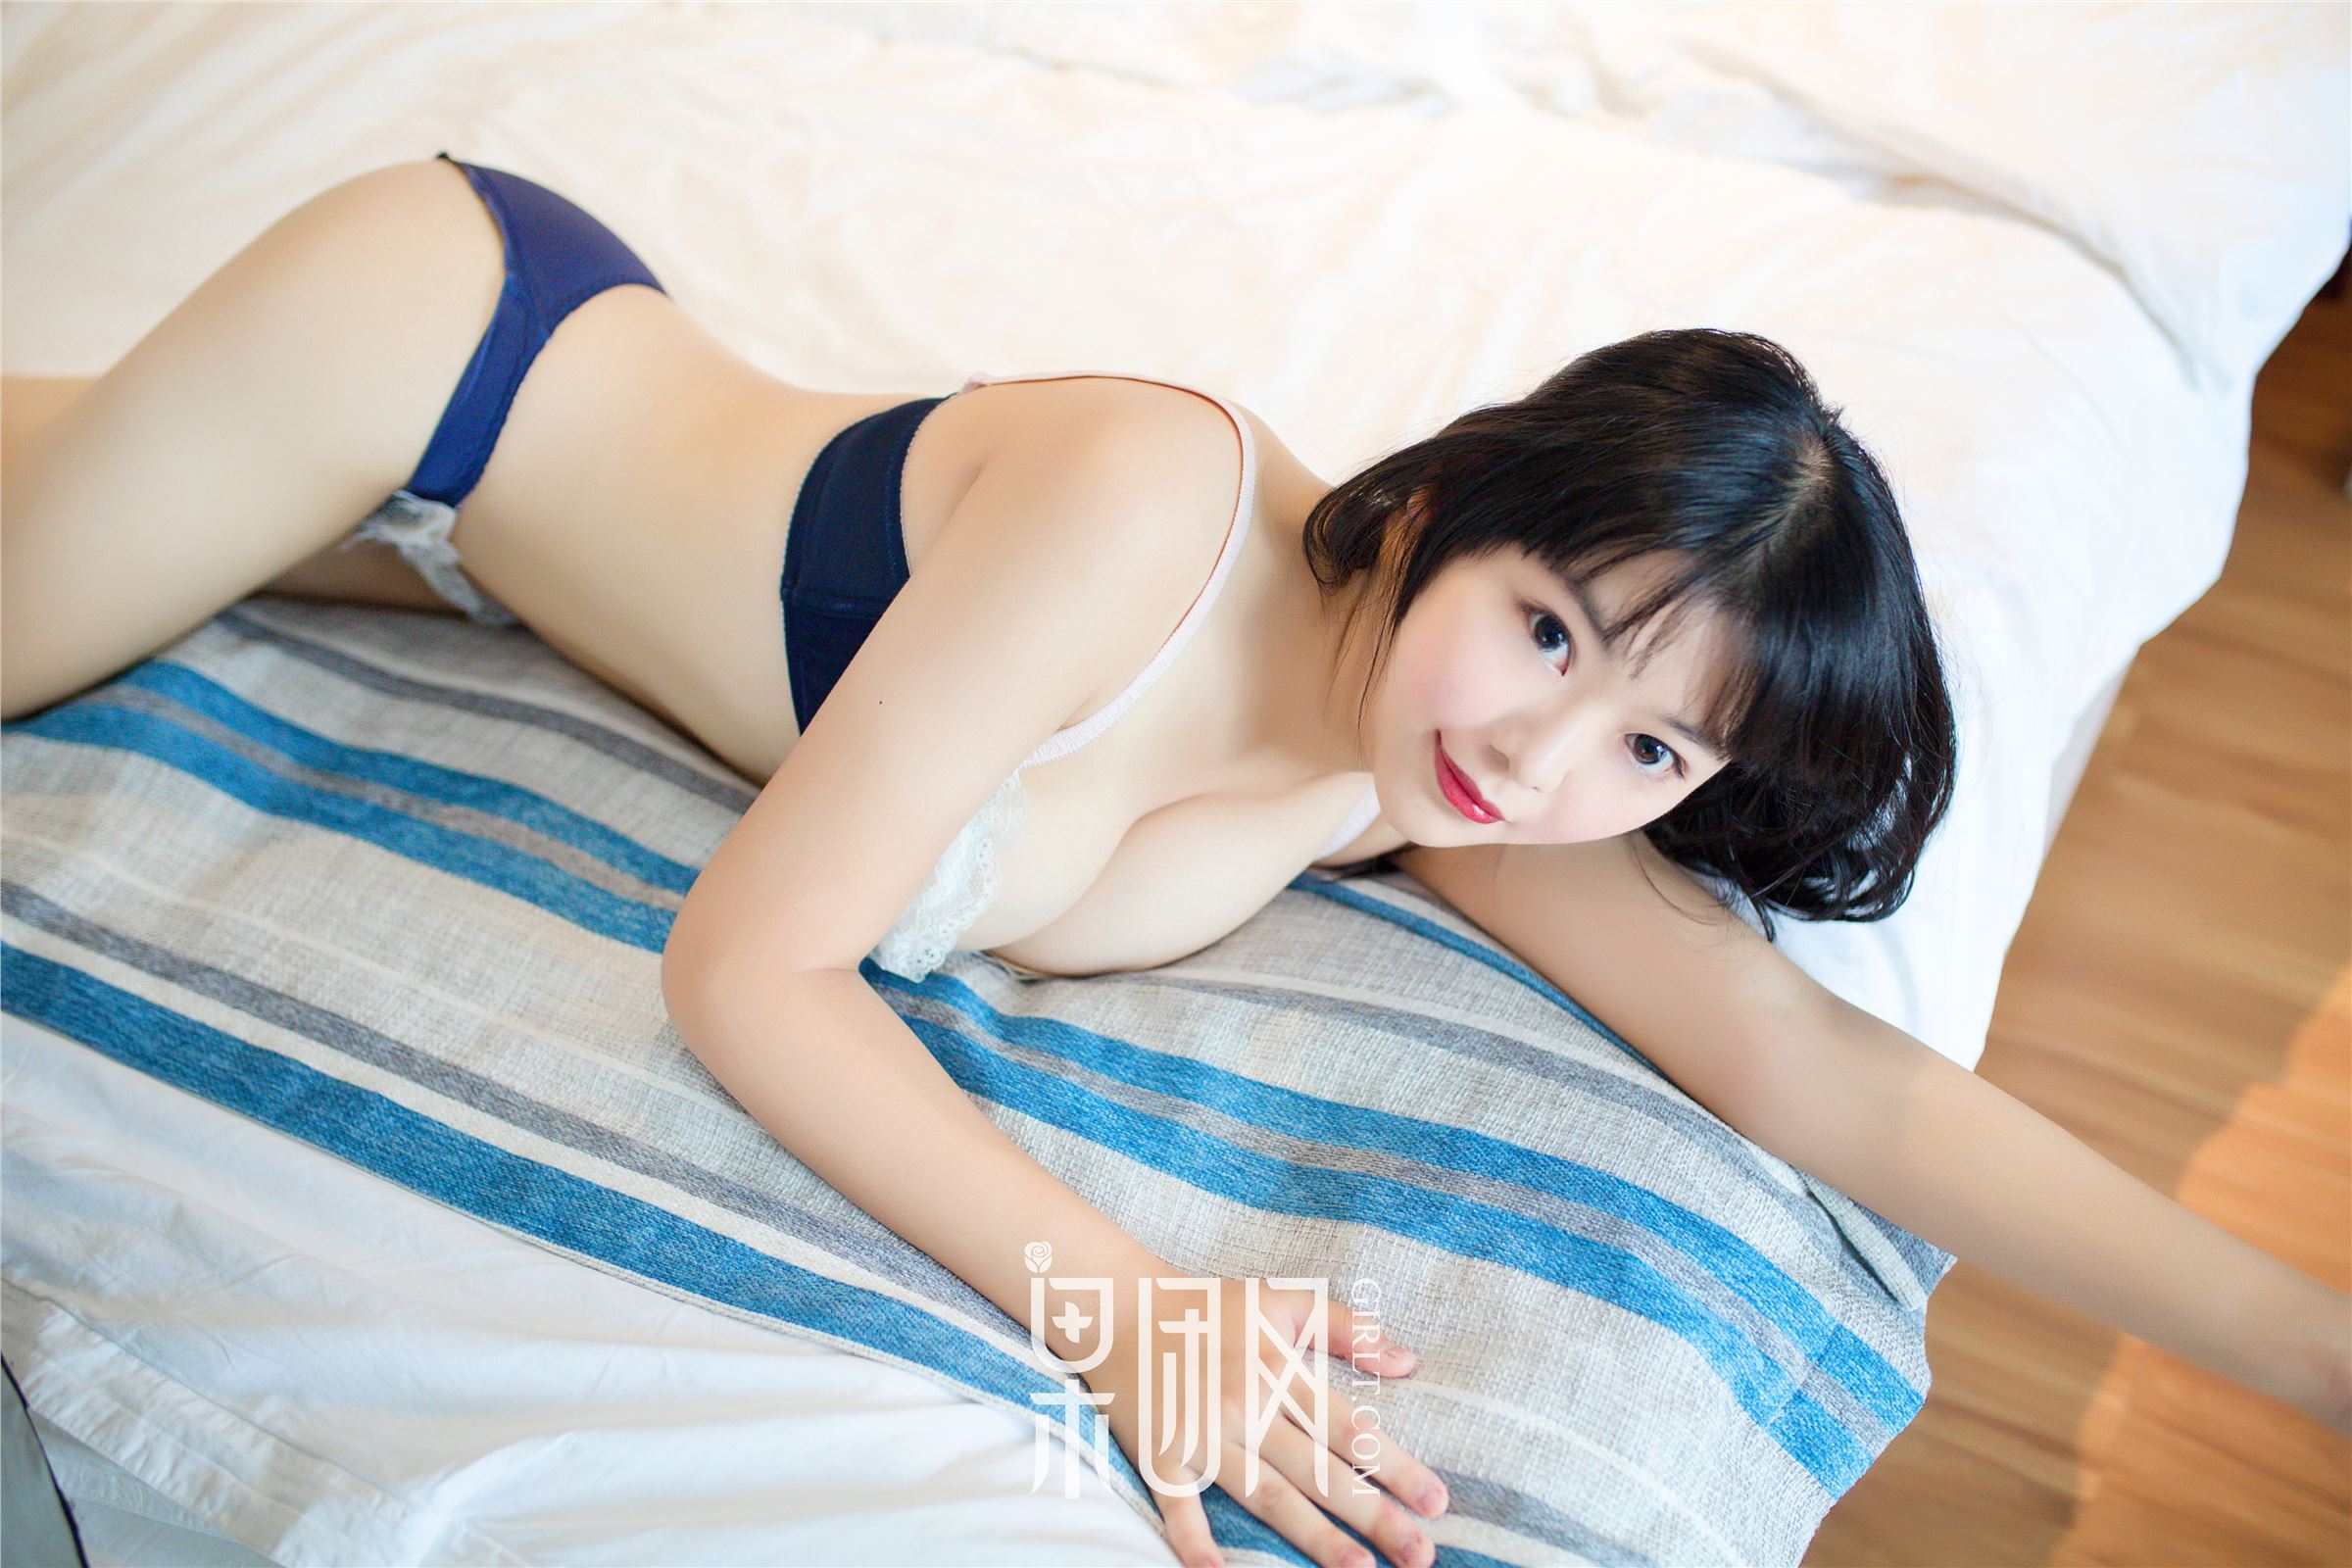 [girlt.com] No.113 chijianyuanfeng, December 30, 2017